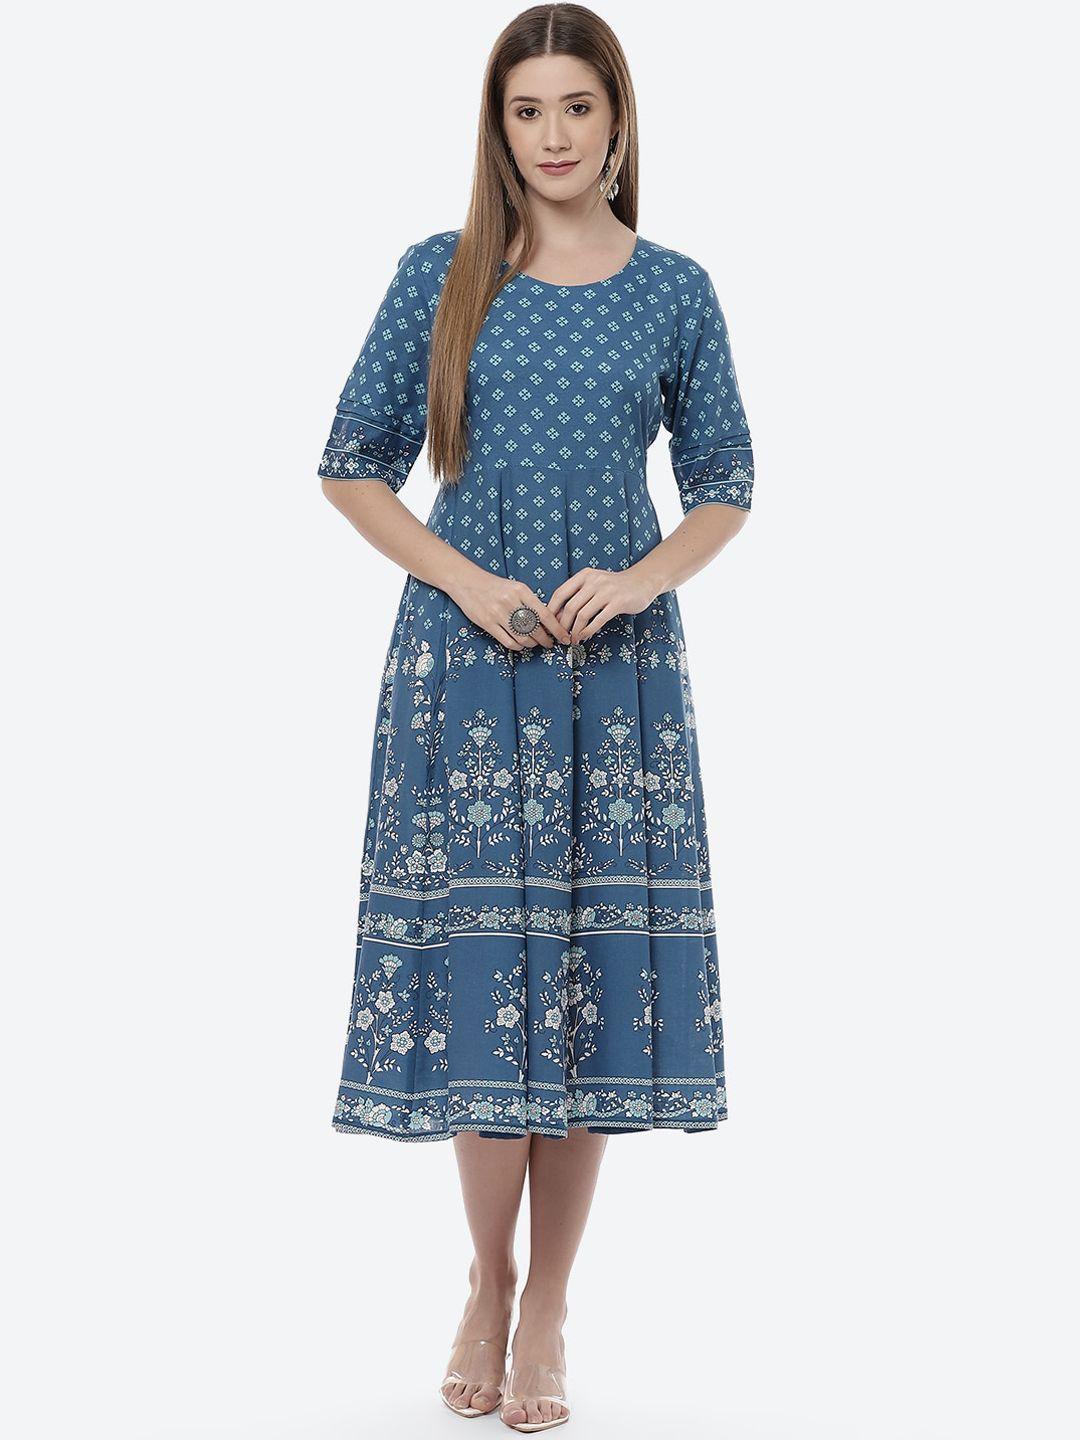 rangriti women navy blue ethnic motifs printed anarkali kurta